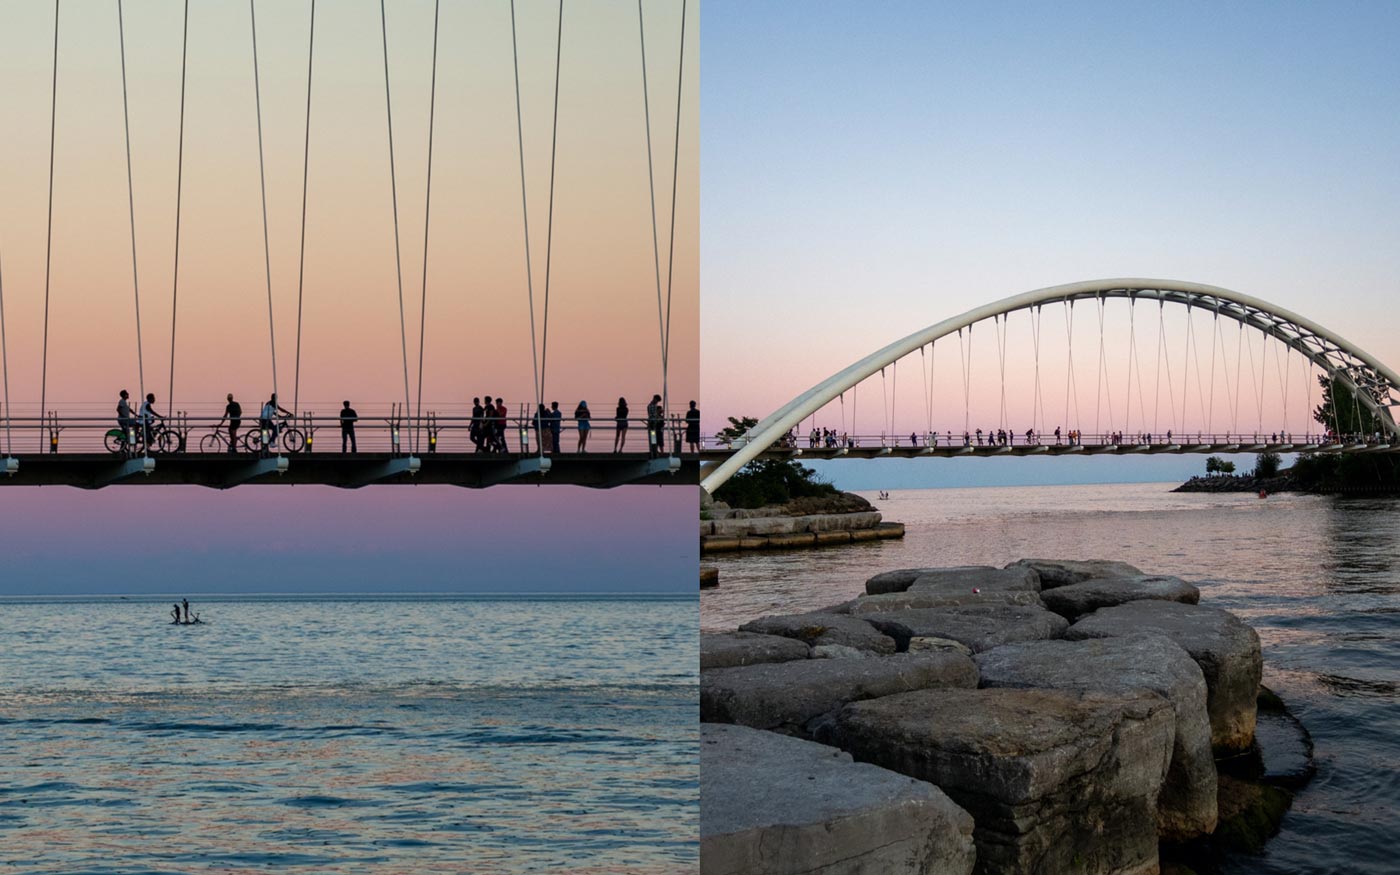 Capturing Summer Landscapes at Humber Bay, Toronto (Photography Process)